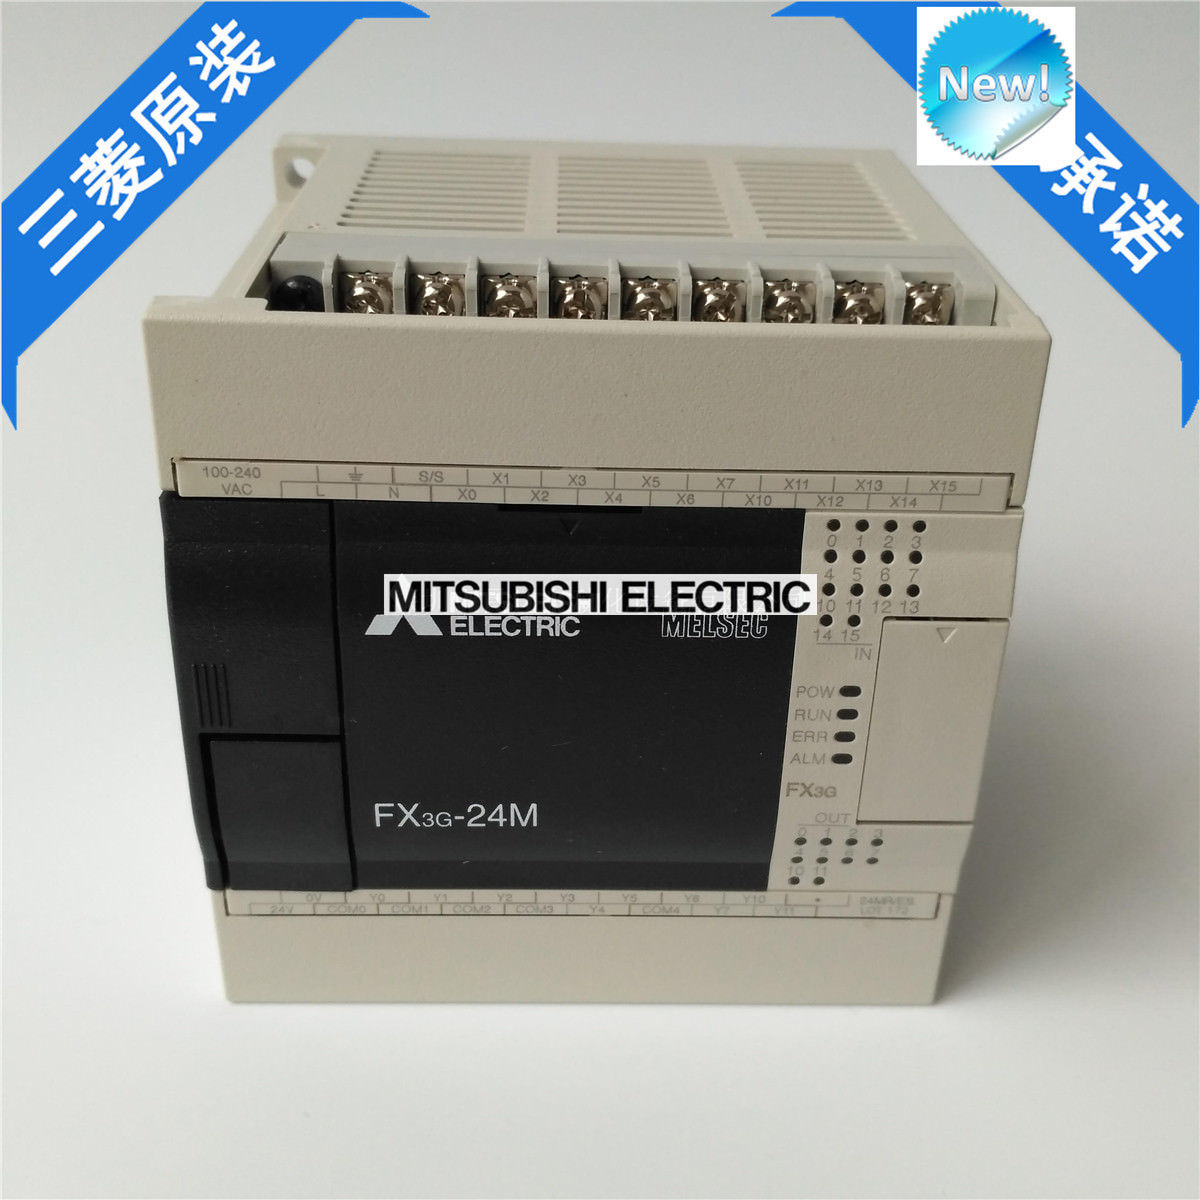 Original New Mitsubishi PLC FX3G-24MR/ES-A In Box FX3G24MRESA - Click Image to Close